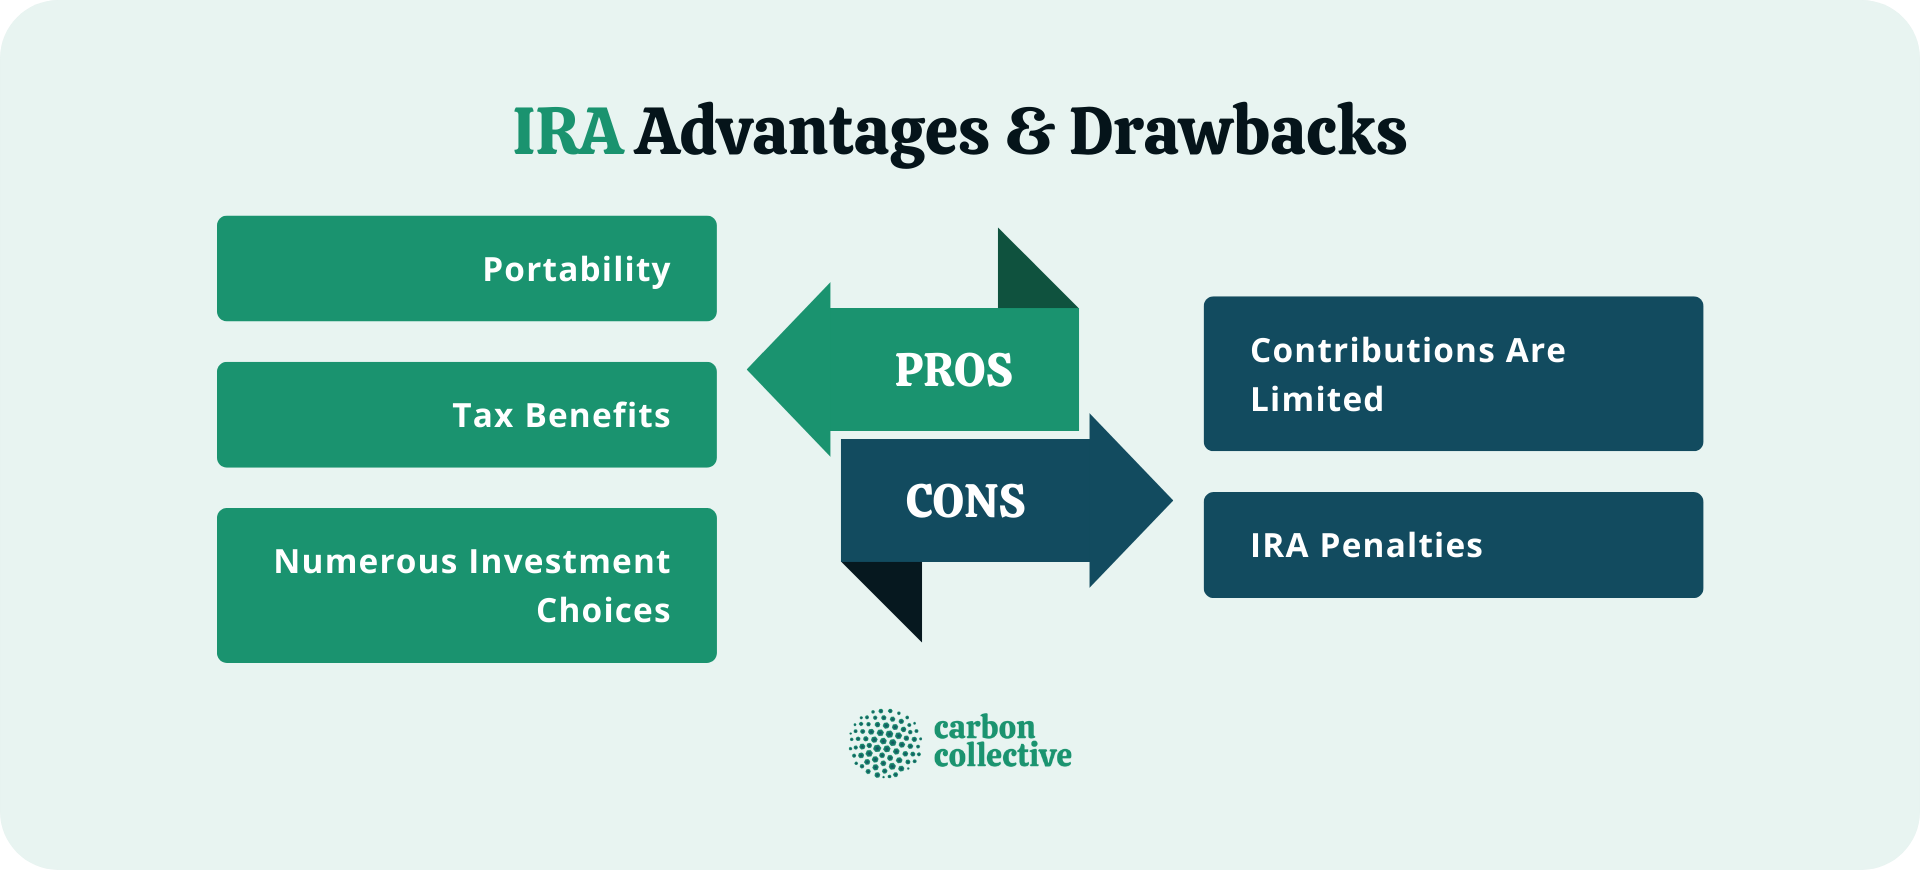 IRA_Advantages_&_Drawbacks